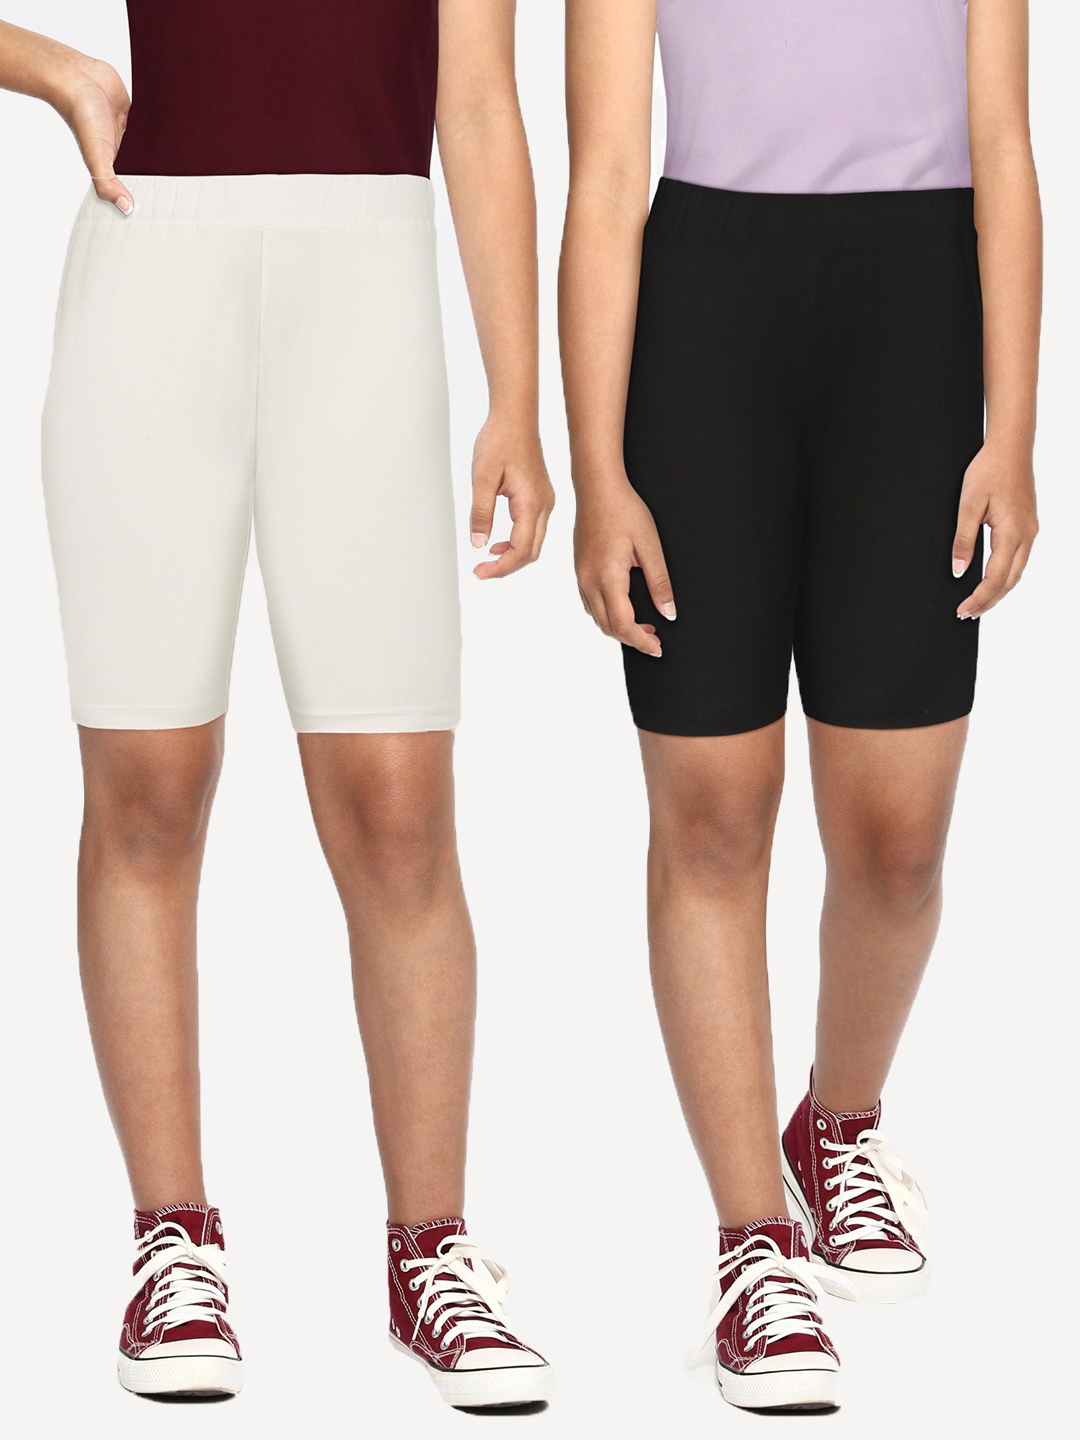 SEYBIL | SEYBIL Girls Pack of 2 Solid Slim Fit Shorts 8